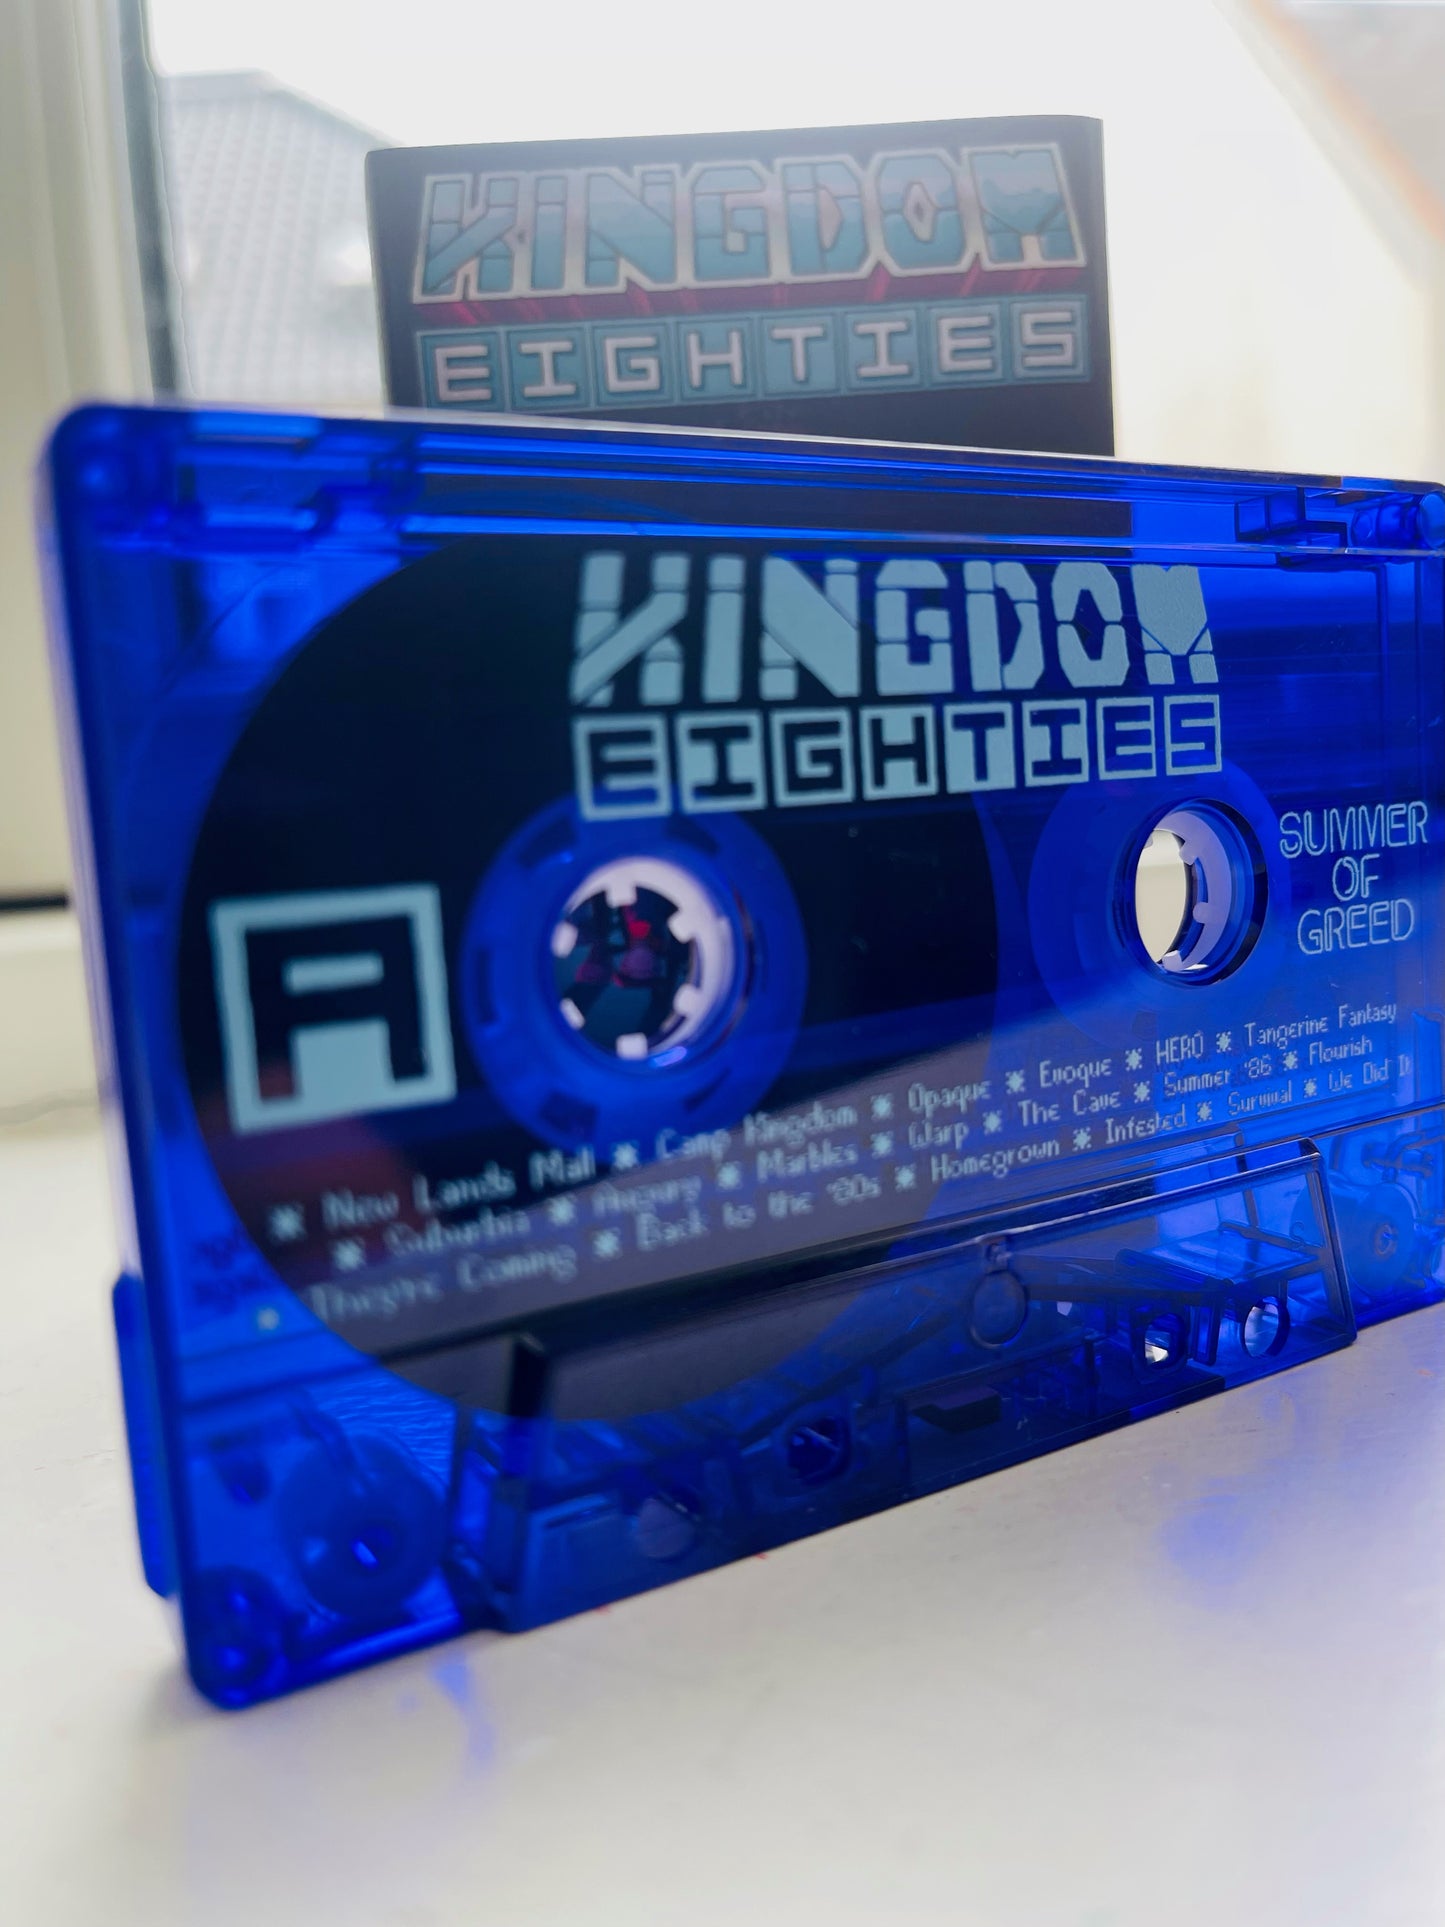 Kingdom Eighties cassette tape